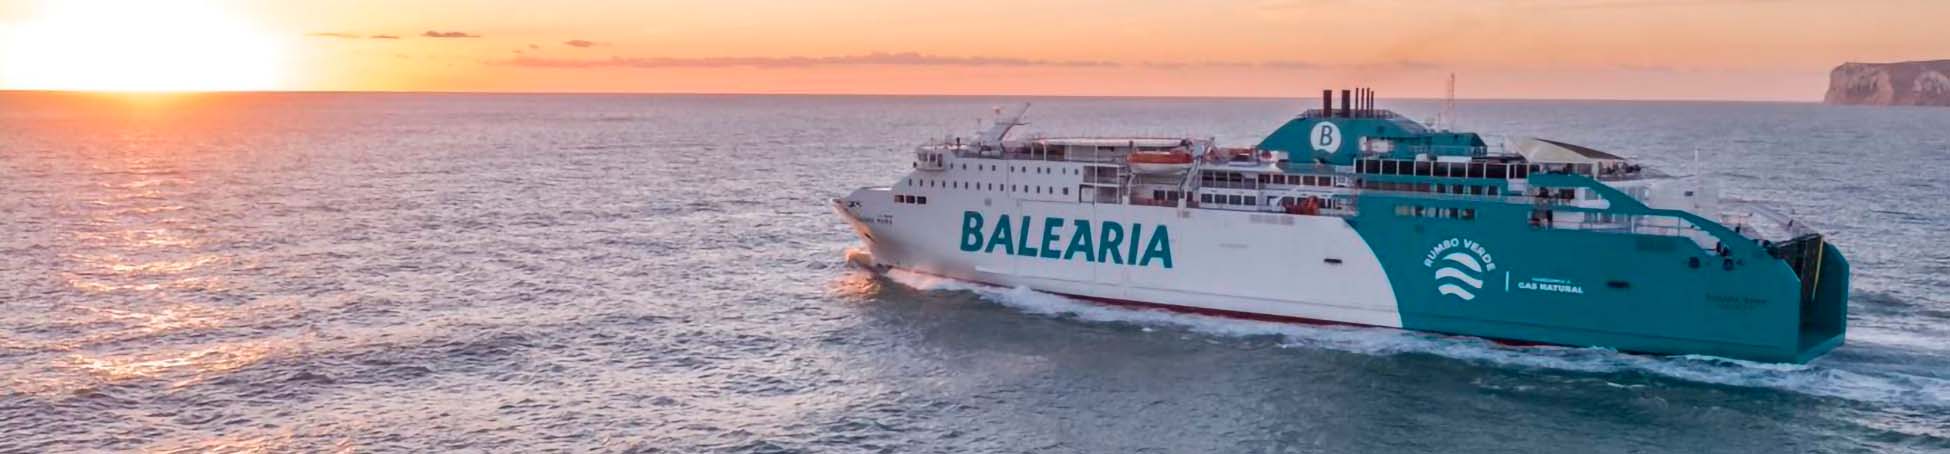 Ressourcenbild des Zielhafens Dénia für die Fährverbindung Mallorca (Palma) - Dénia